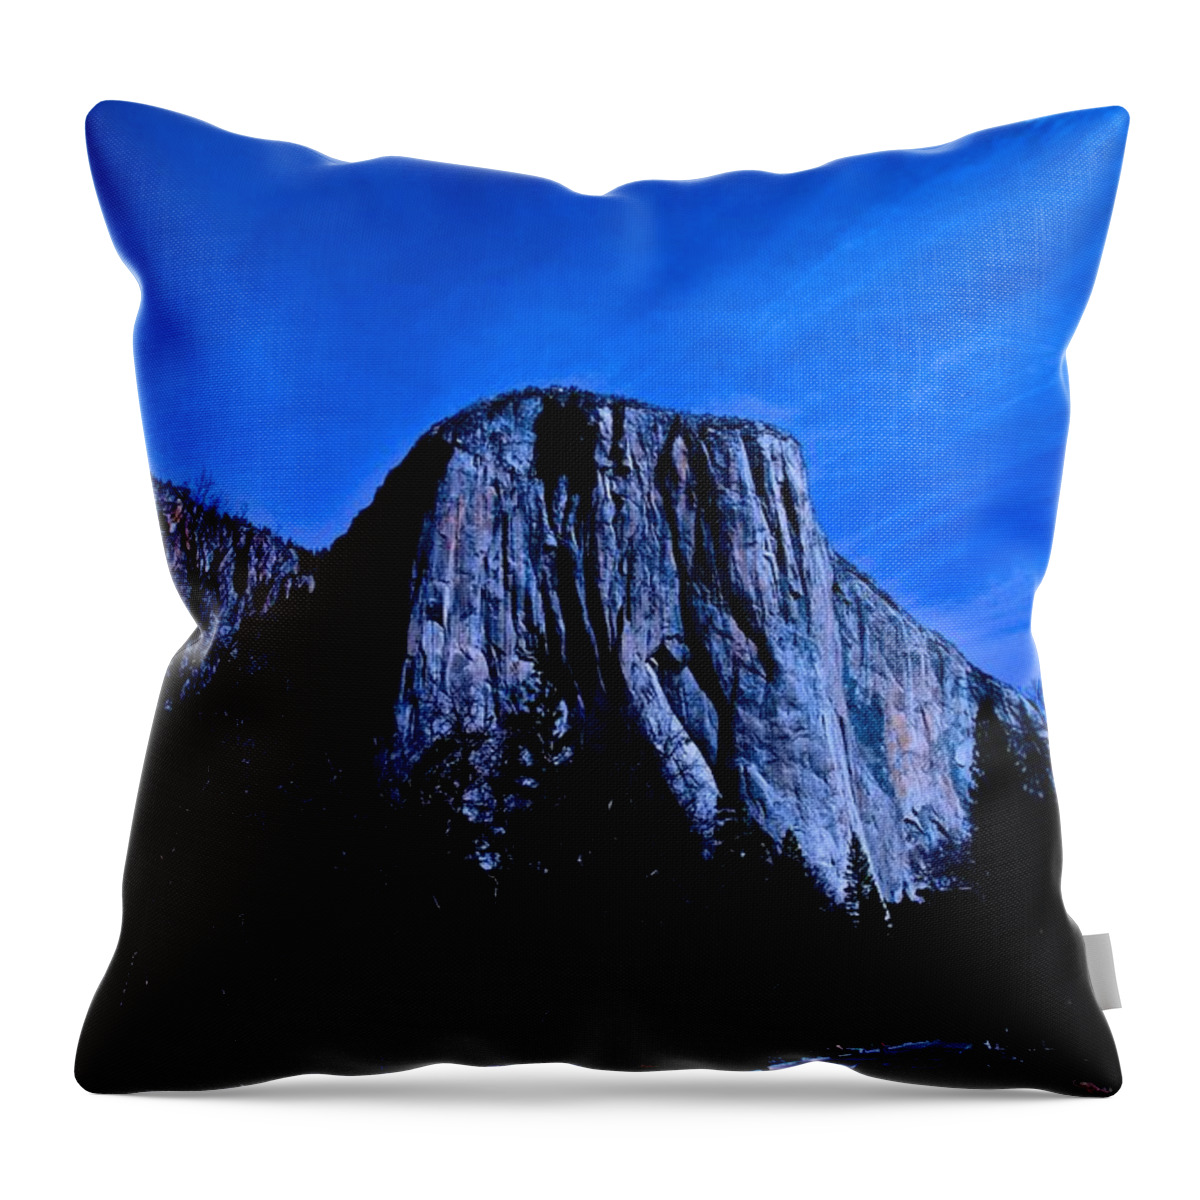 Yosemite Throw Pillow featuring the photograph El Capitan of Yosemite by Eric Tressler